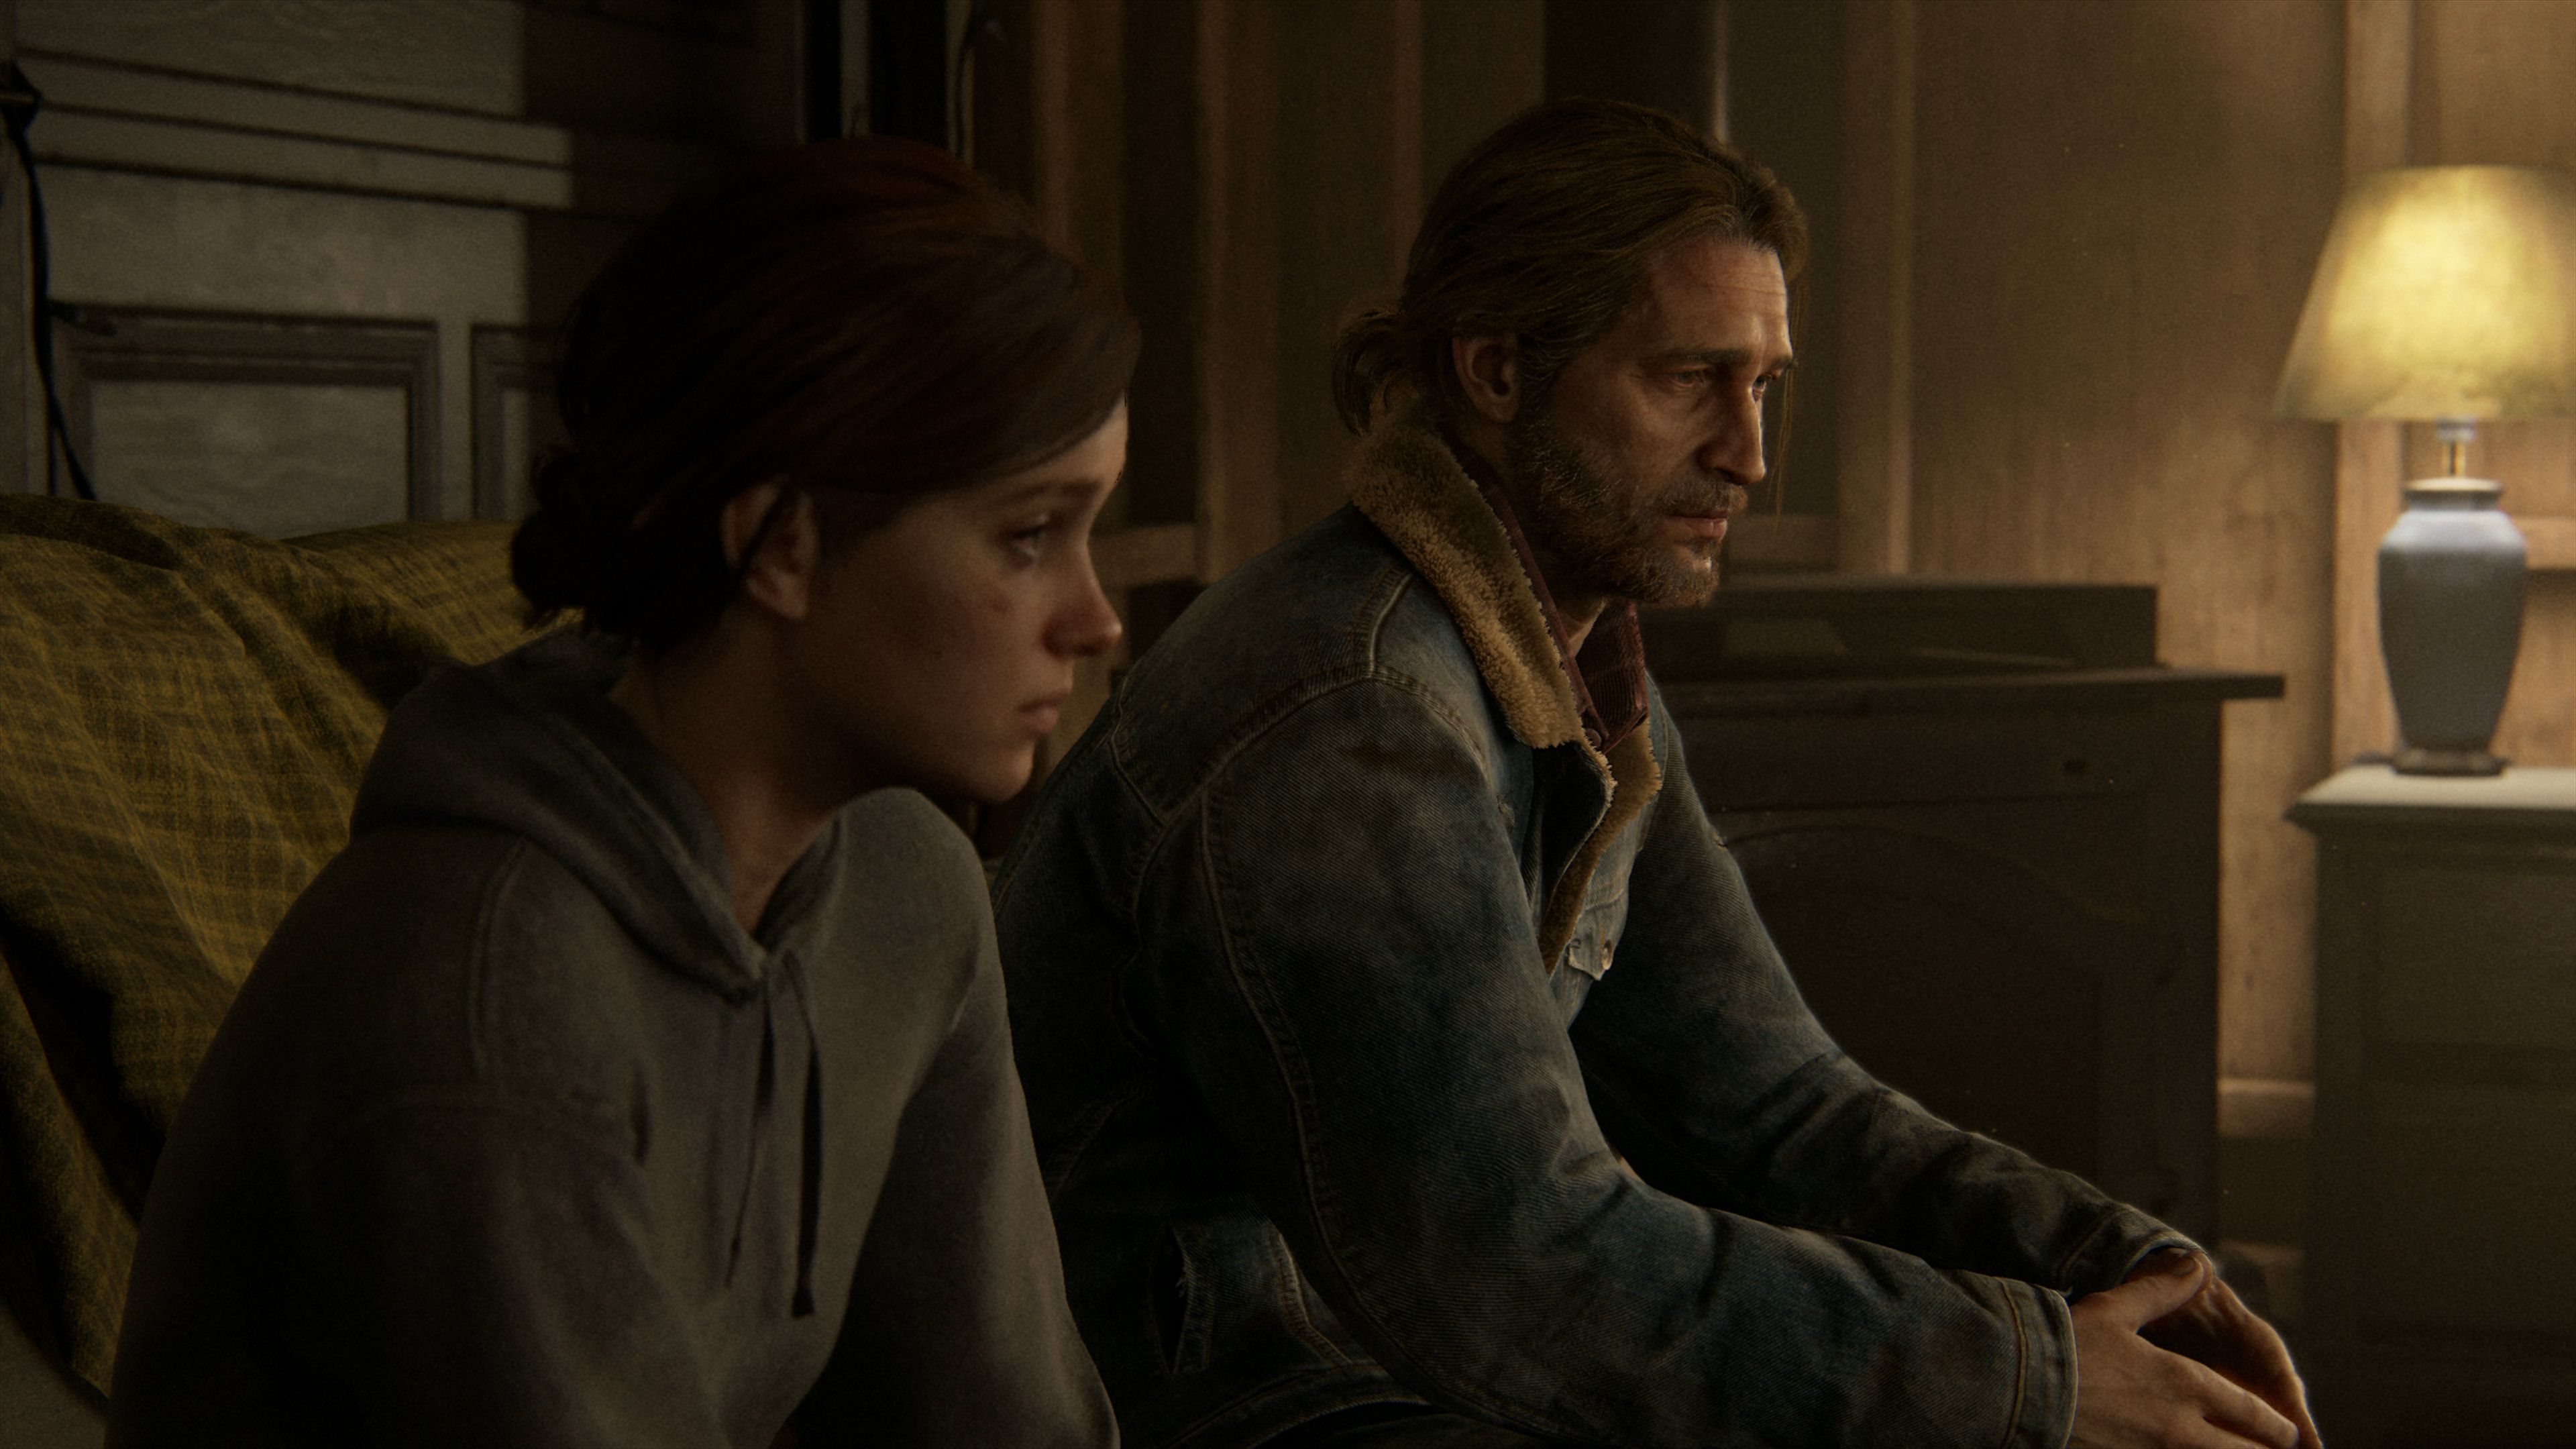 The Last of Us II narrative trailer